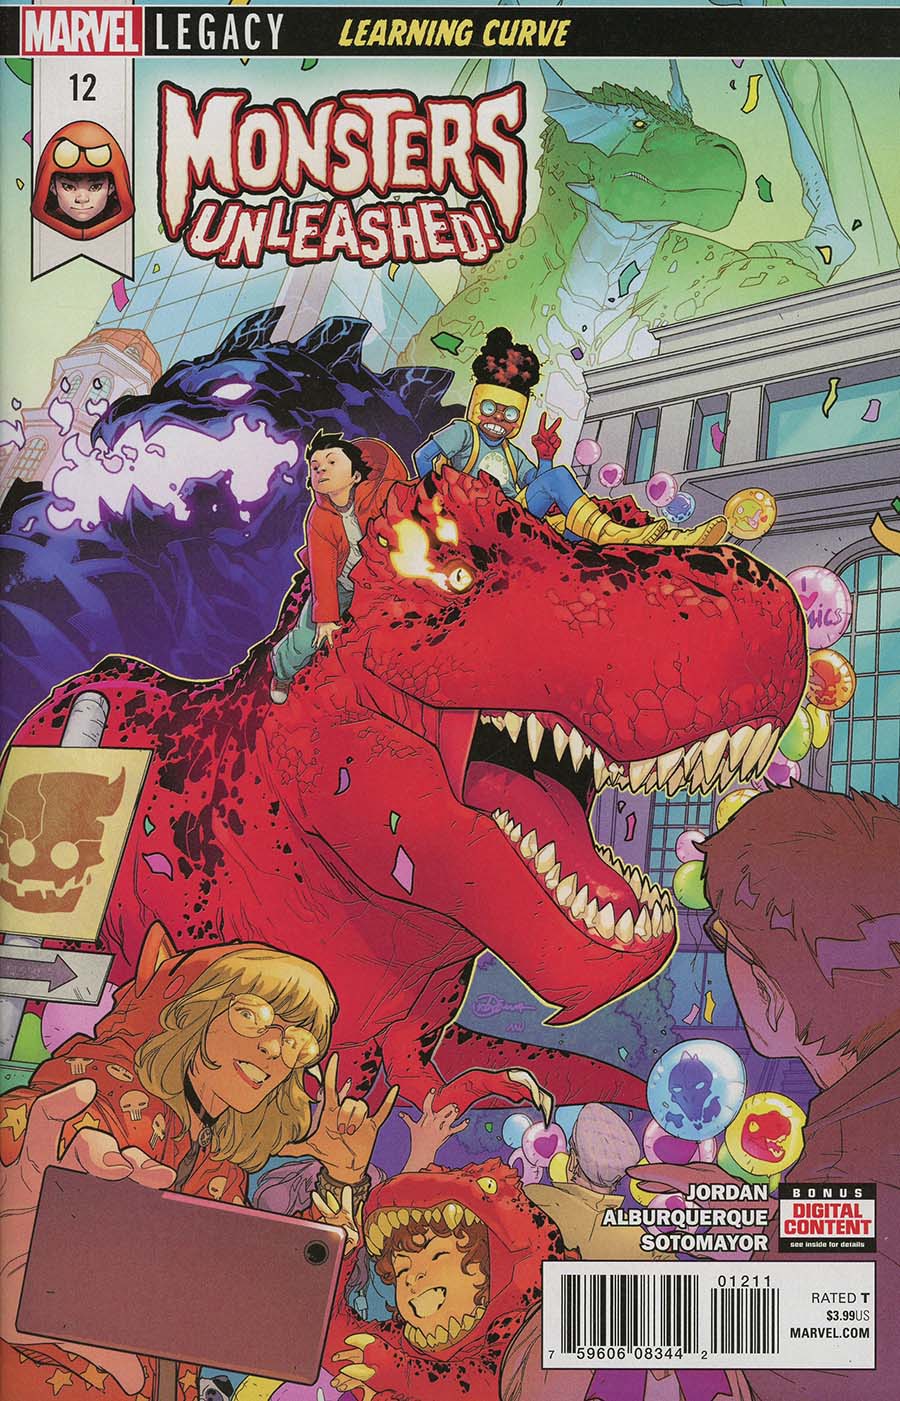 Monsters Unleashed Vol 2 #12 (Marvel Legacy Tie-In)